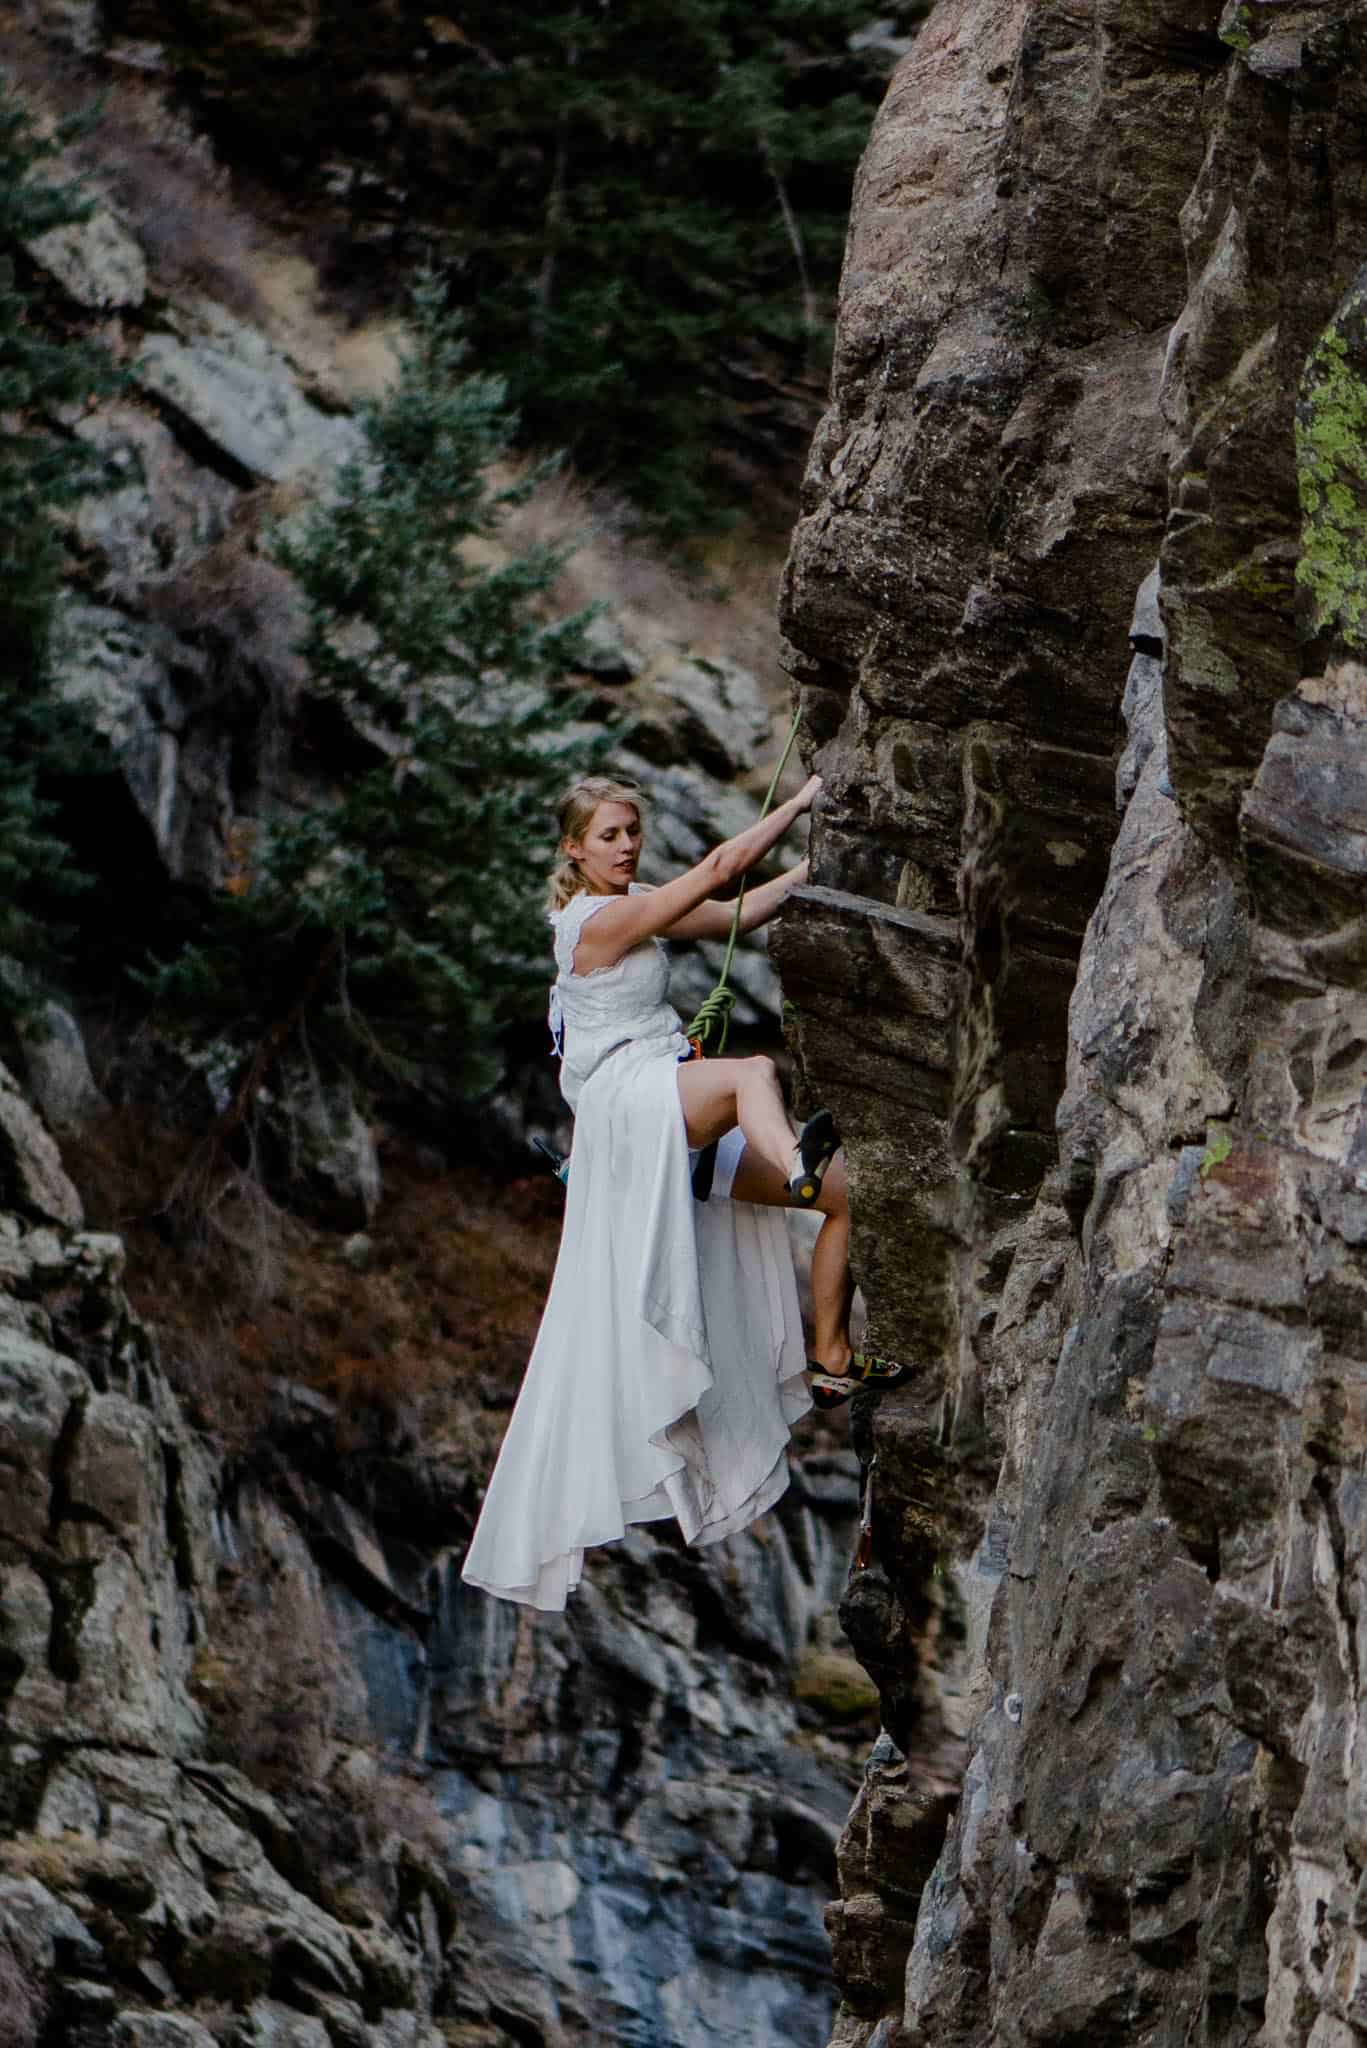 female rock climbing in her wedding dress